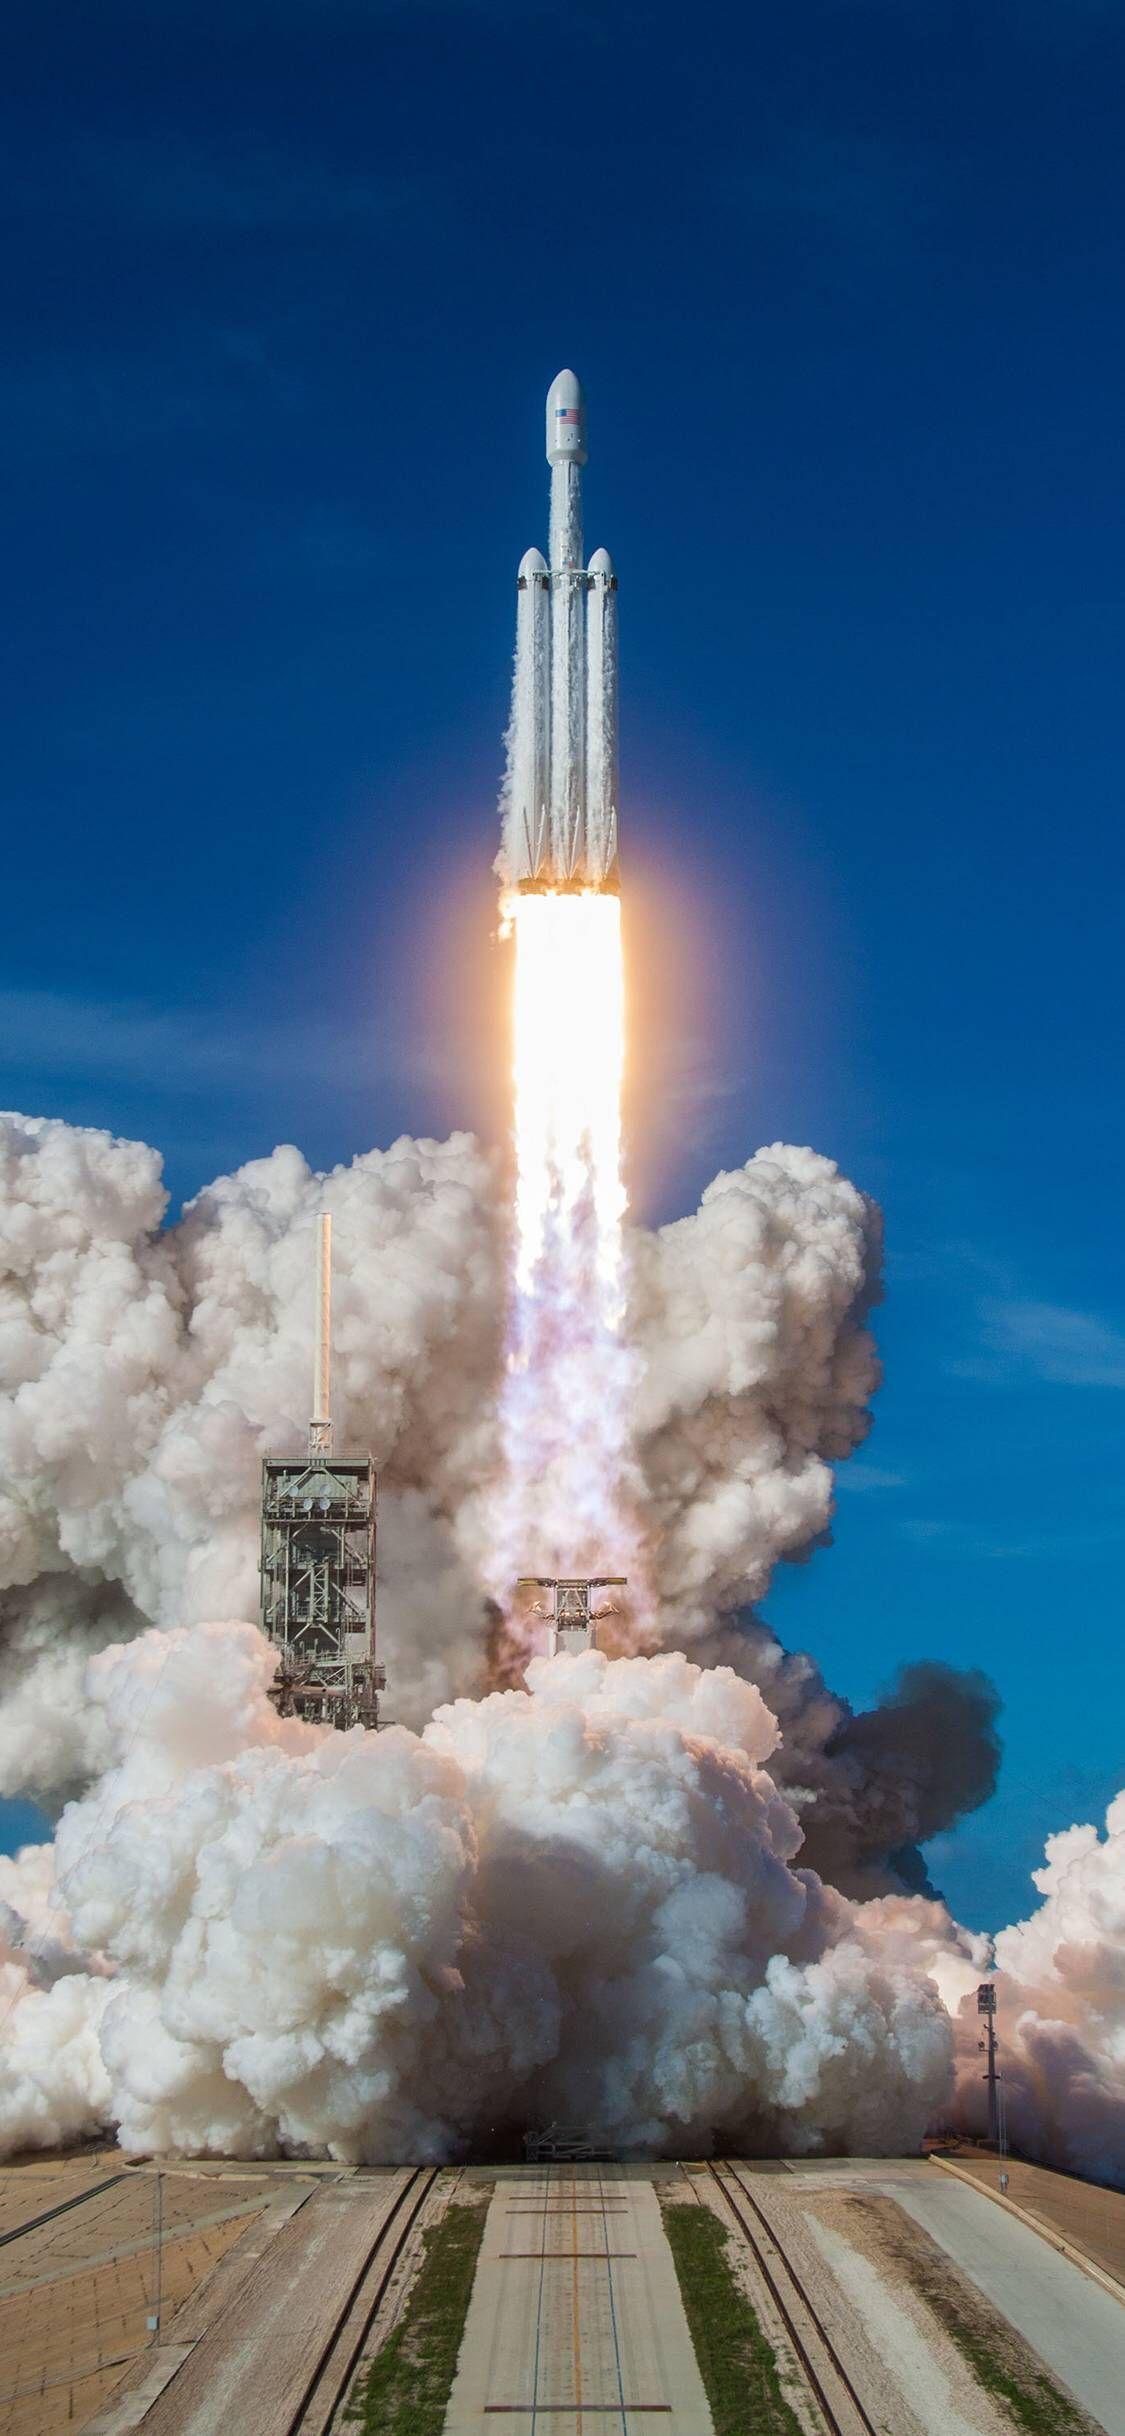 SoaceX Falcon Heavy Test Launch. Beautiful Wallpaper. Nasa space